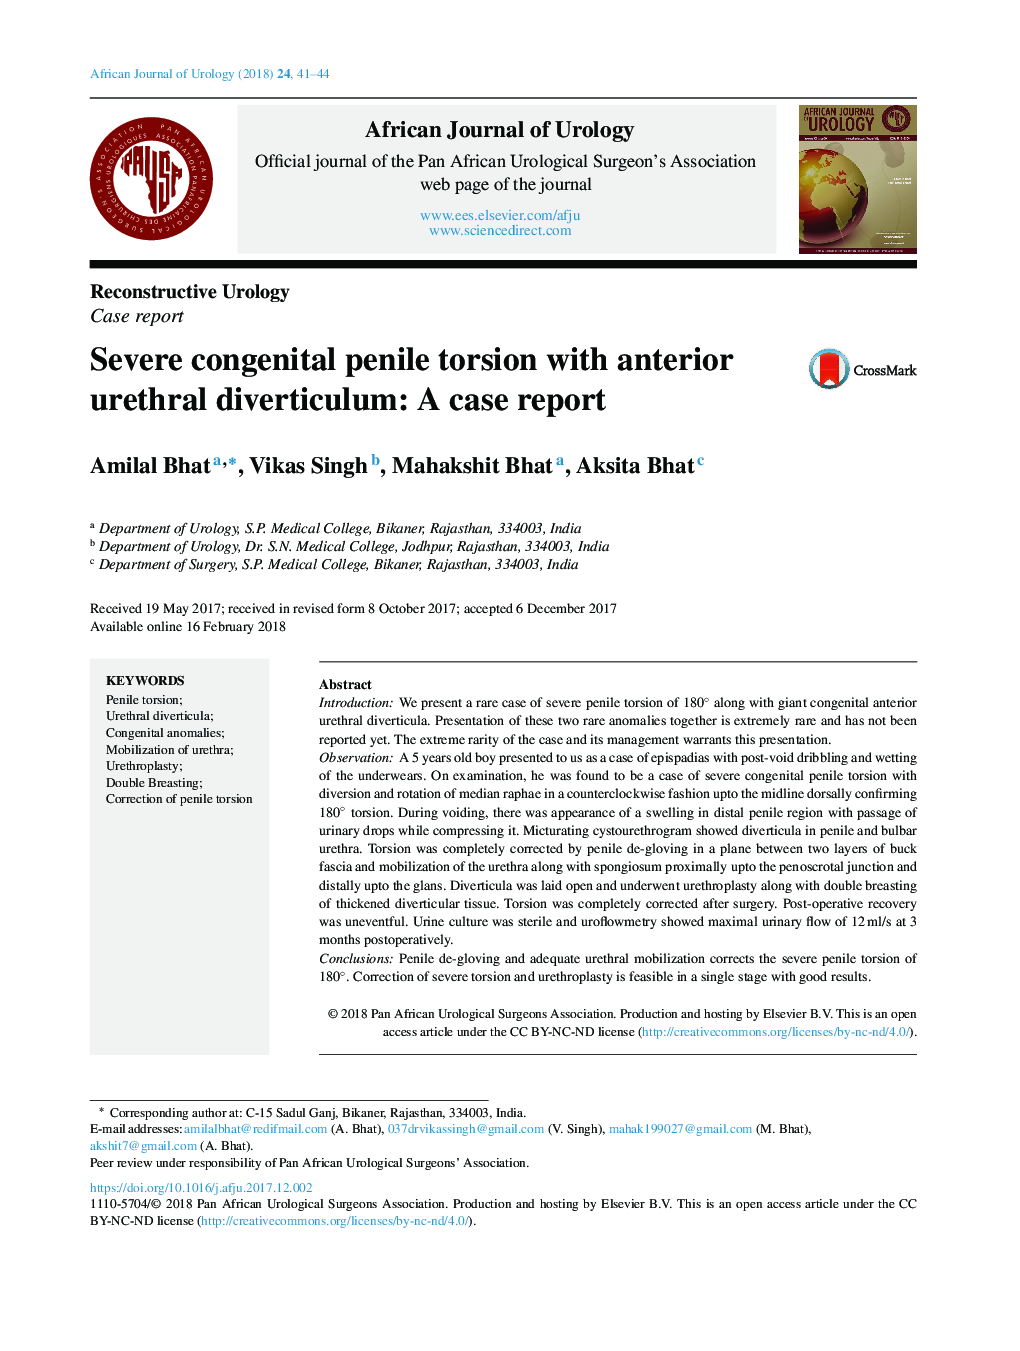 Severe congenital penile torsion with anterior urethral diverticulum: A case report